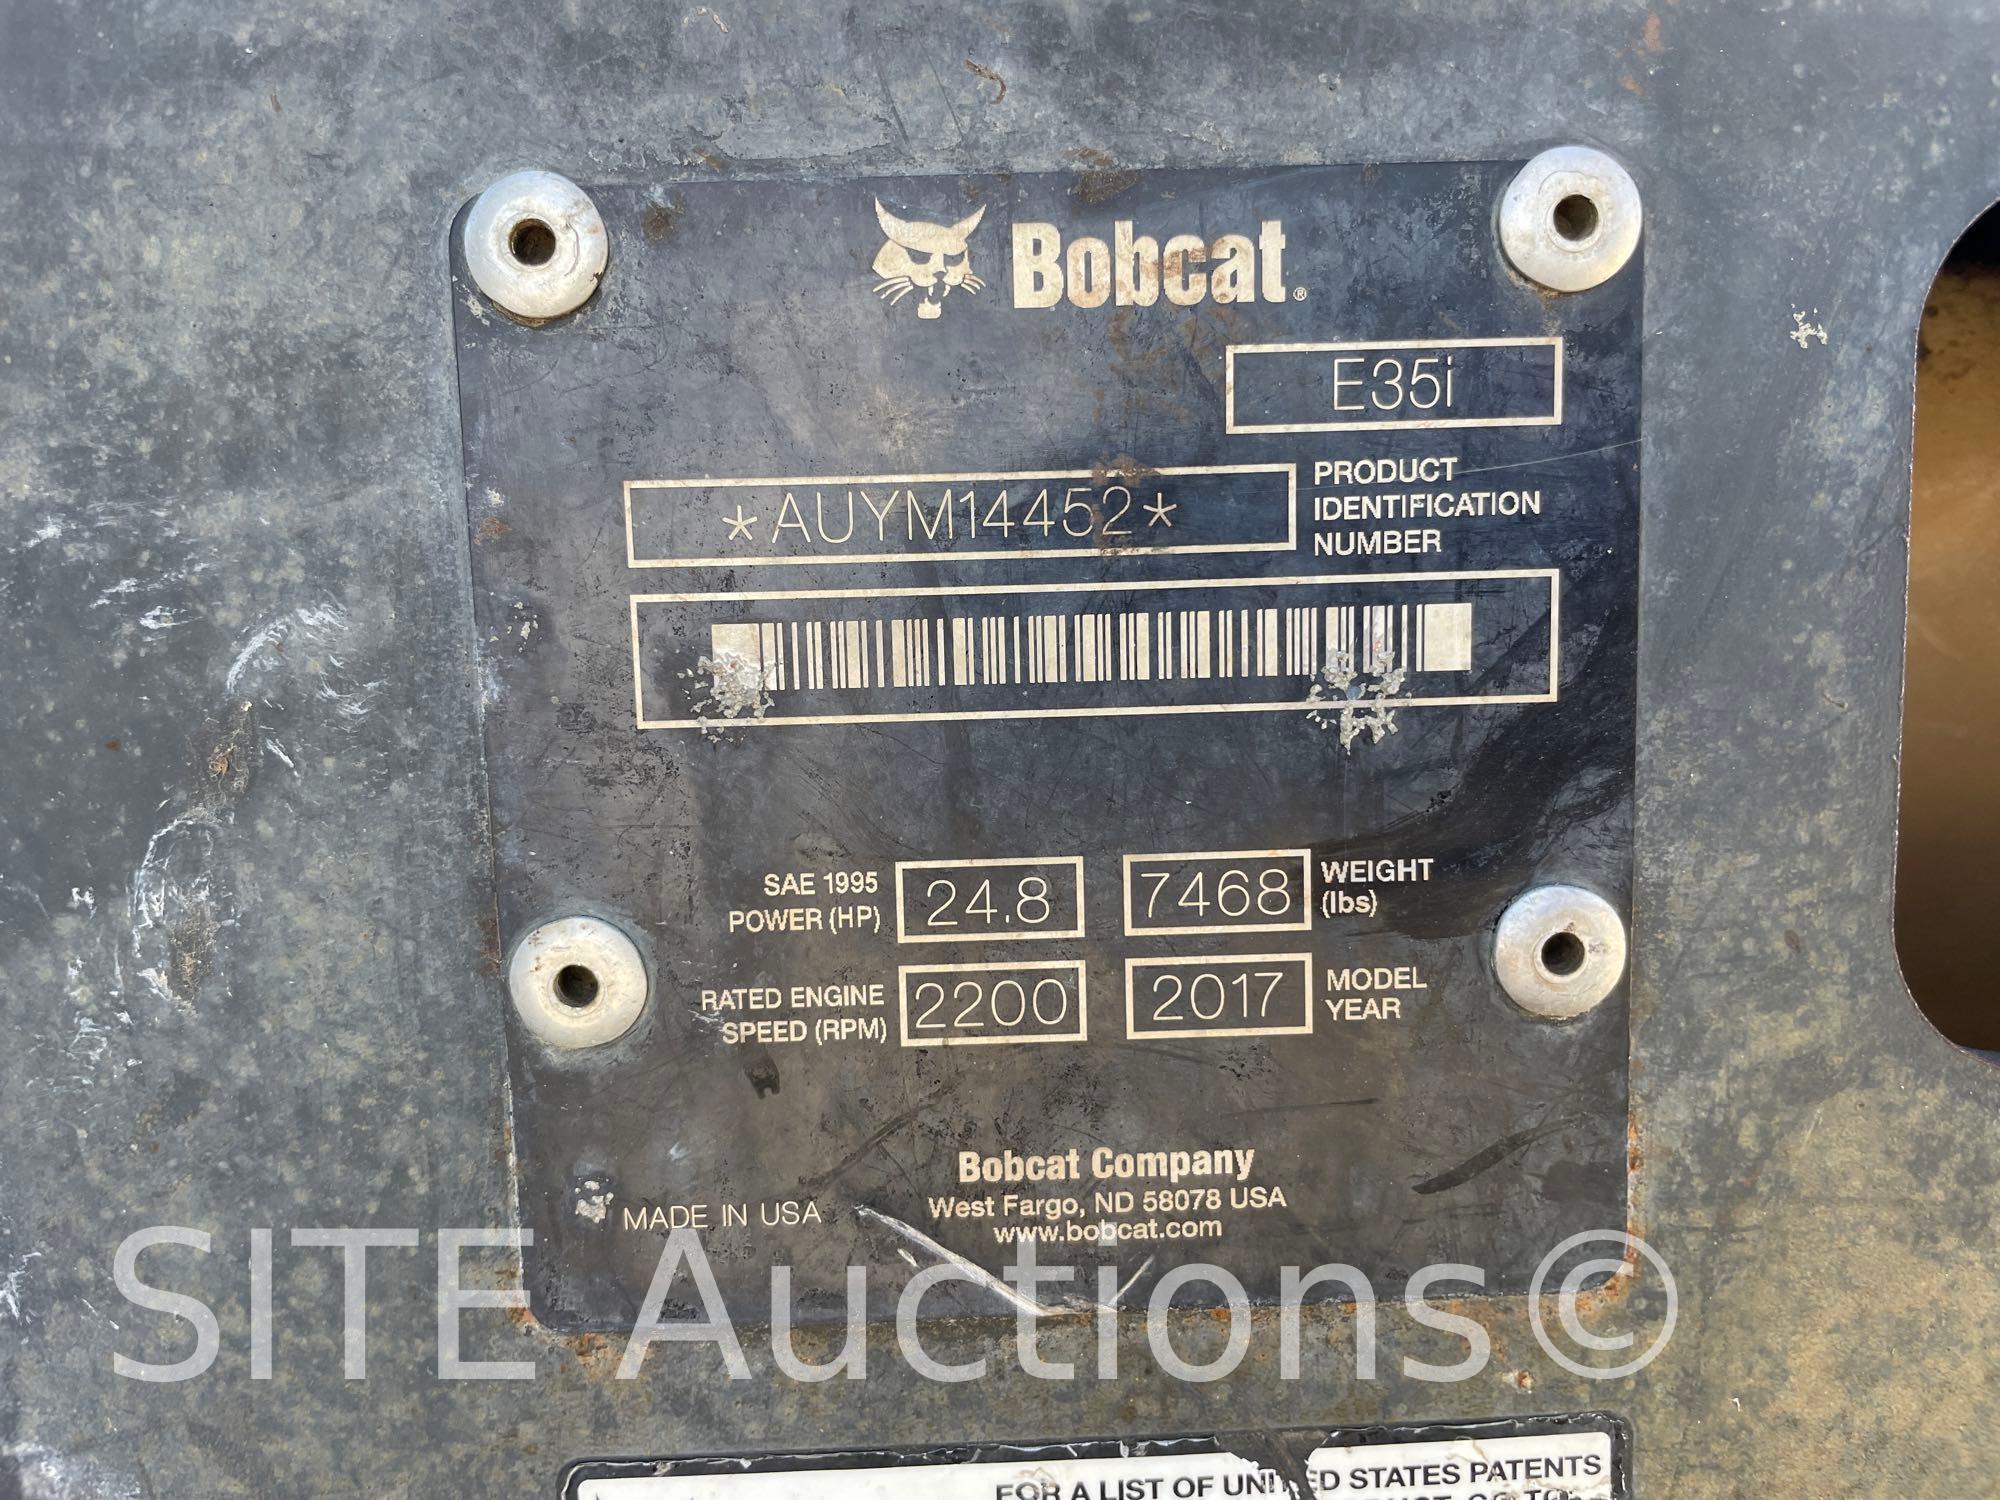 2017 Bobcat E35i Compact Excavator